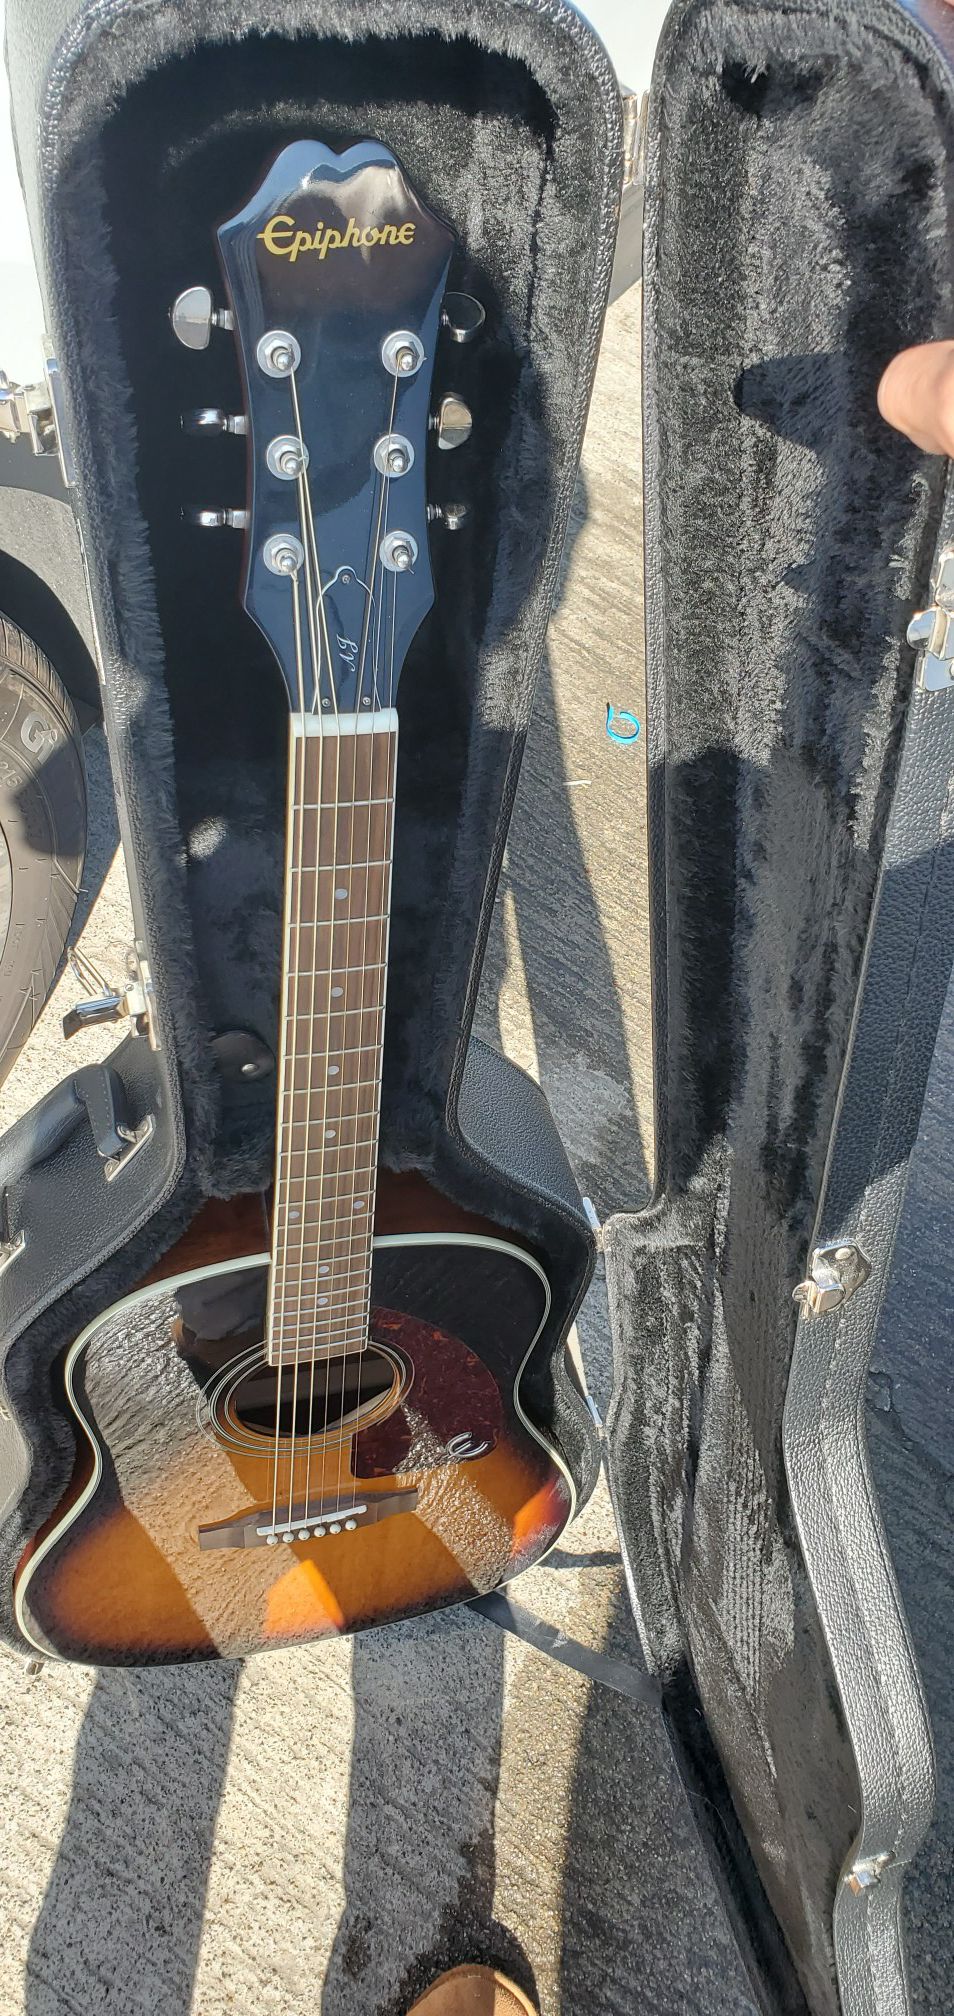 Acoustic Epiphone guitar with hardcase